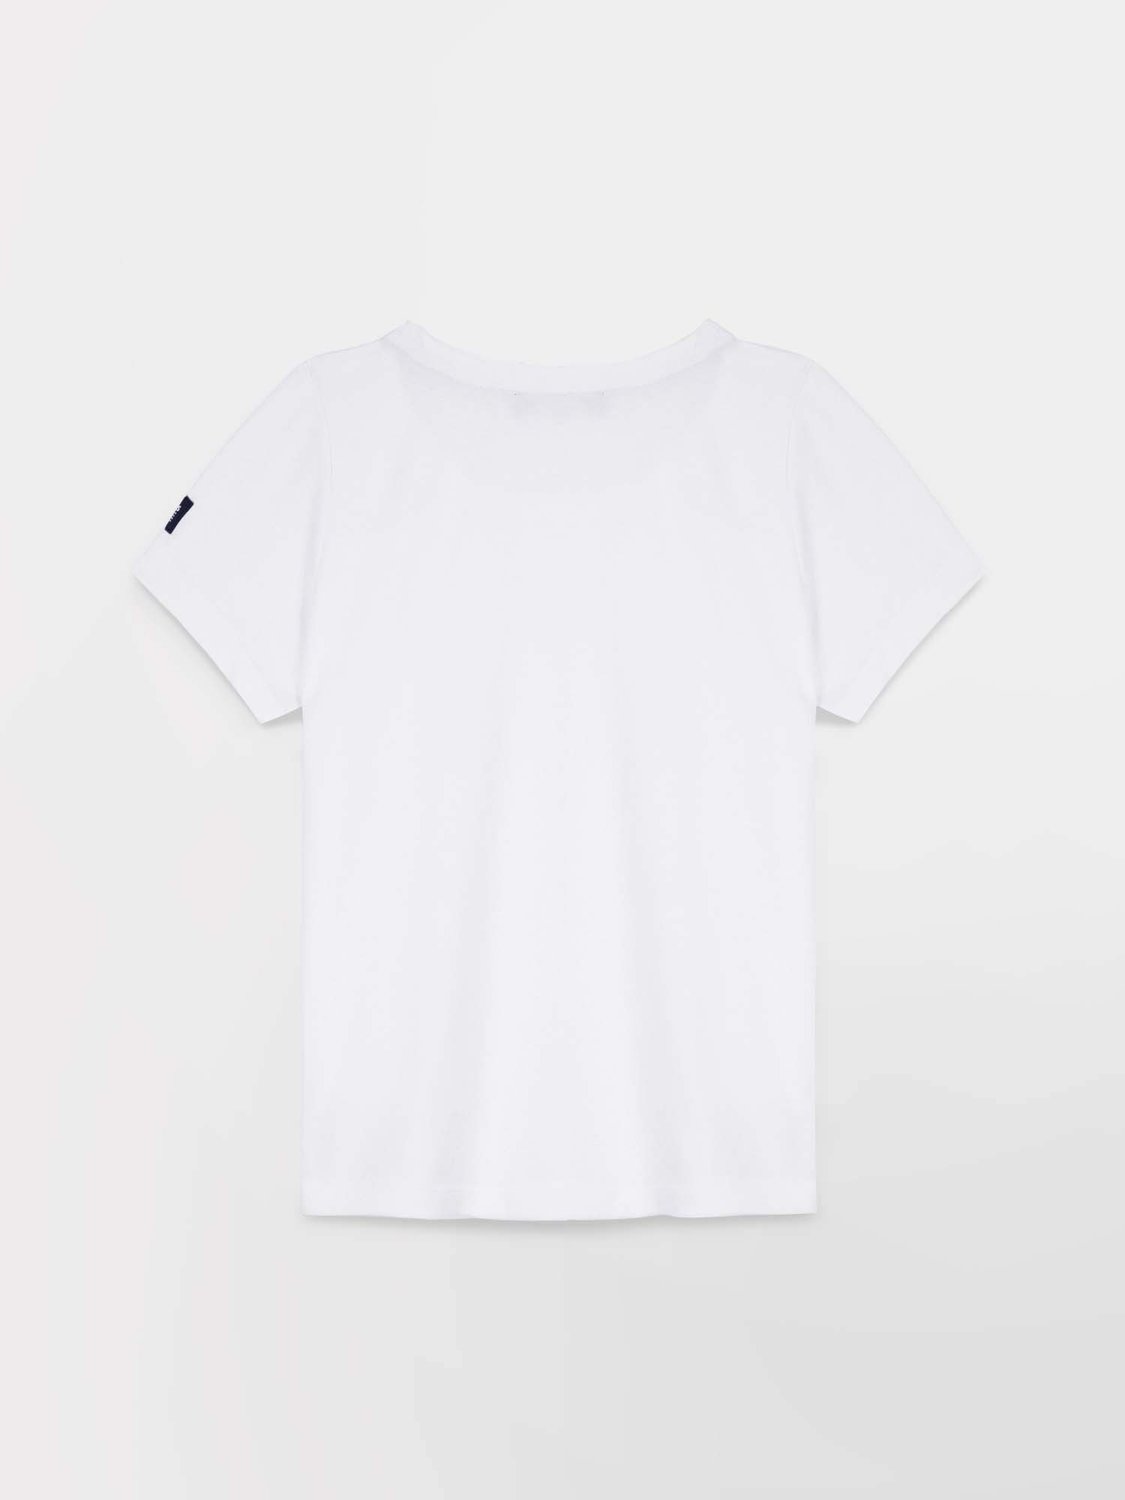 Tee Shirt Femme Pratique Sportive Blanc